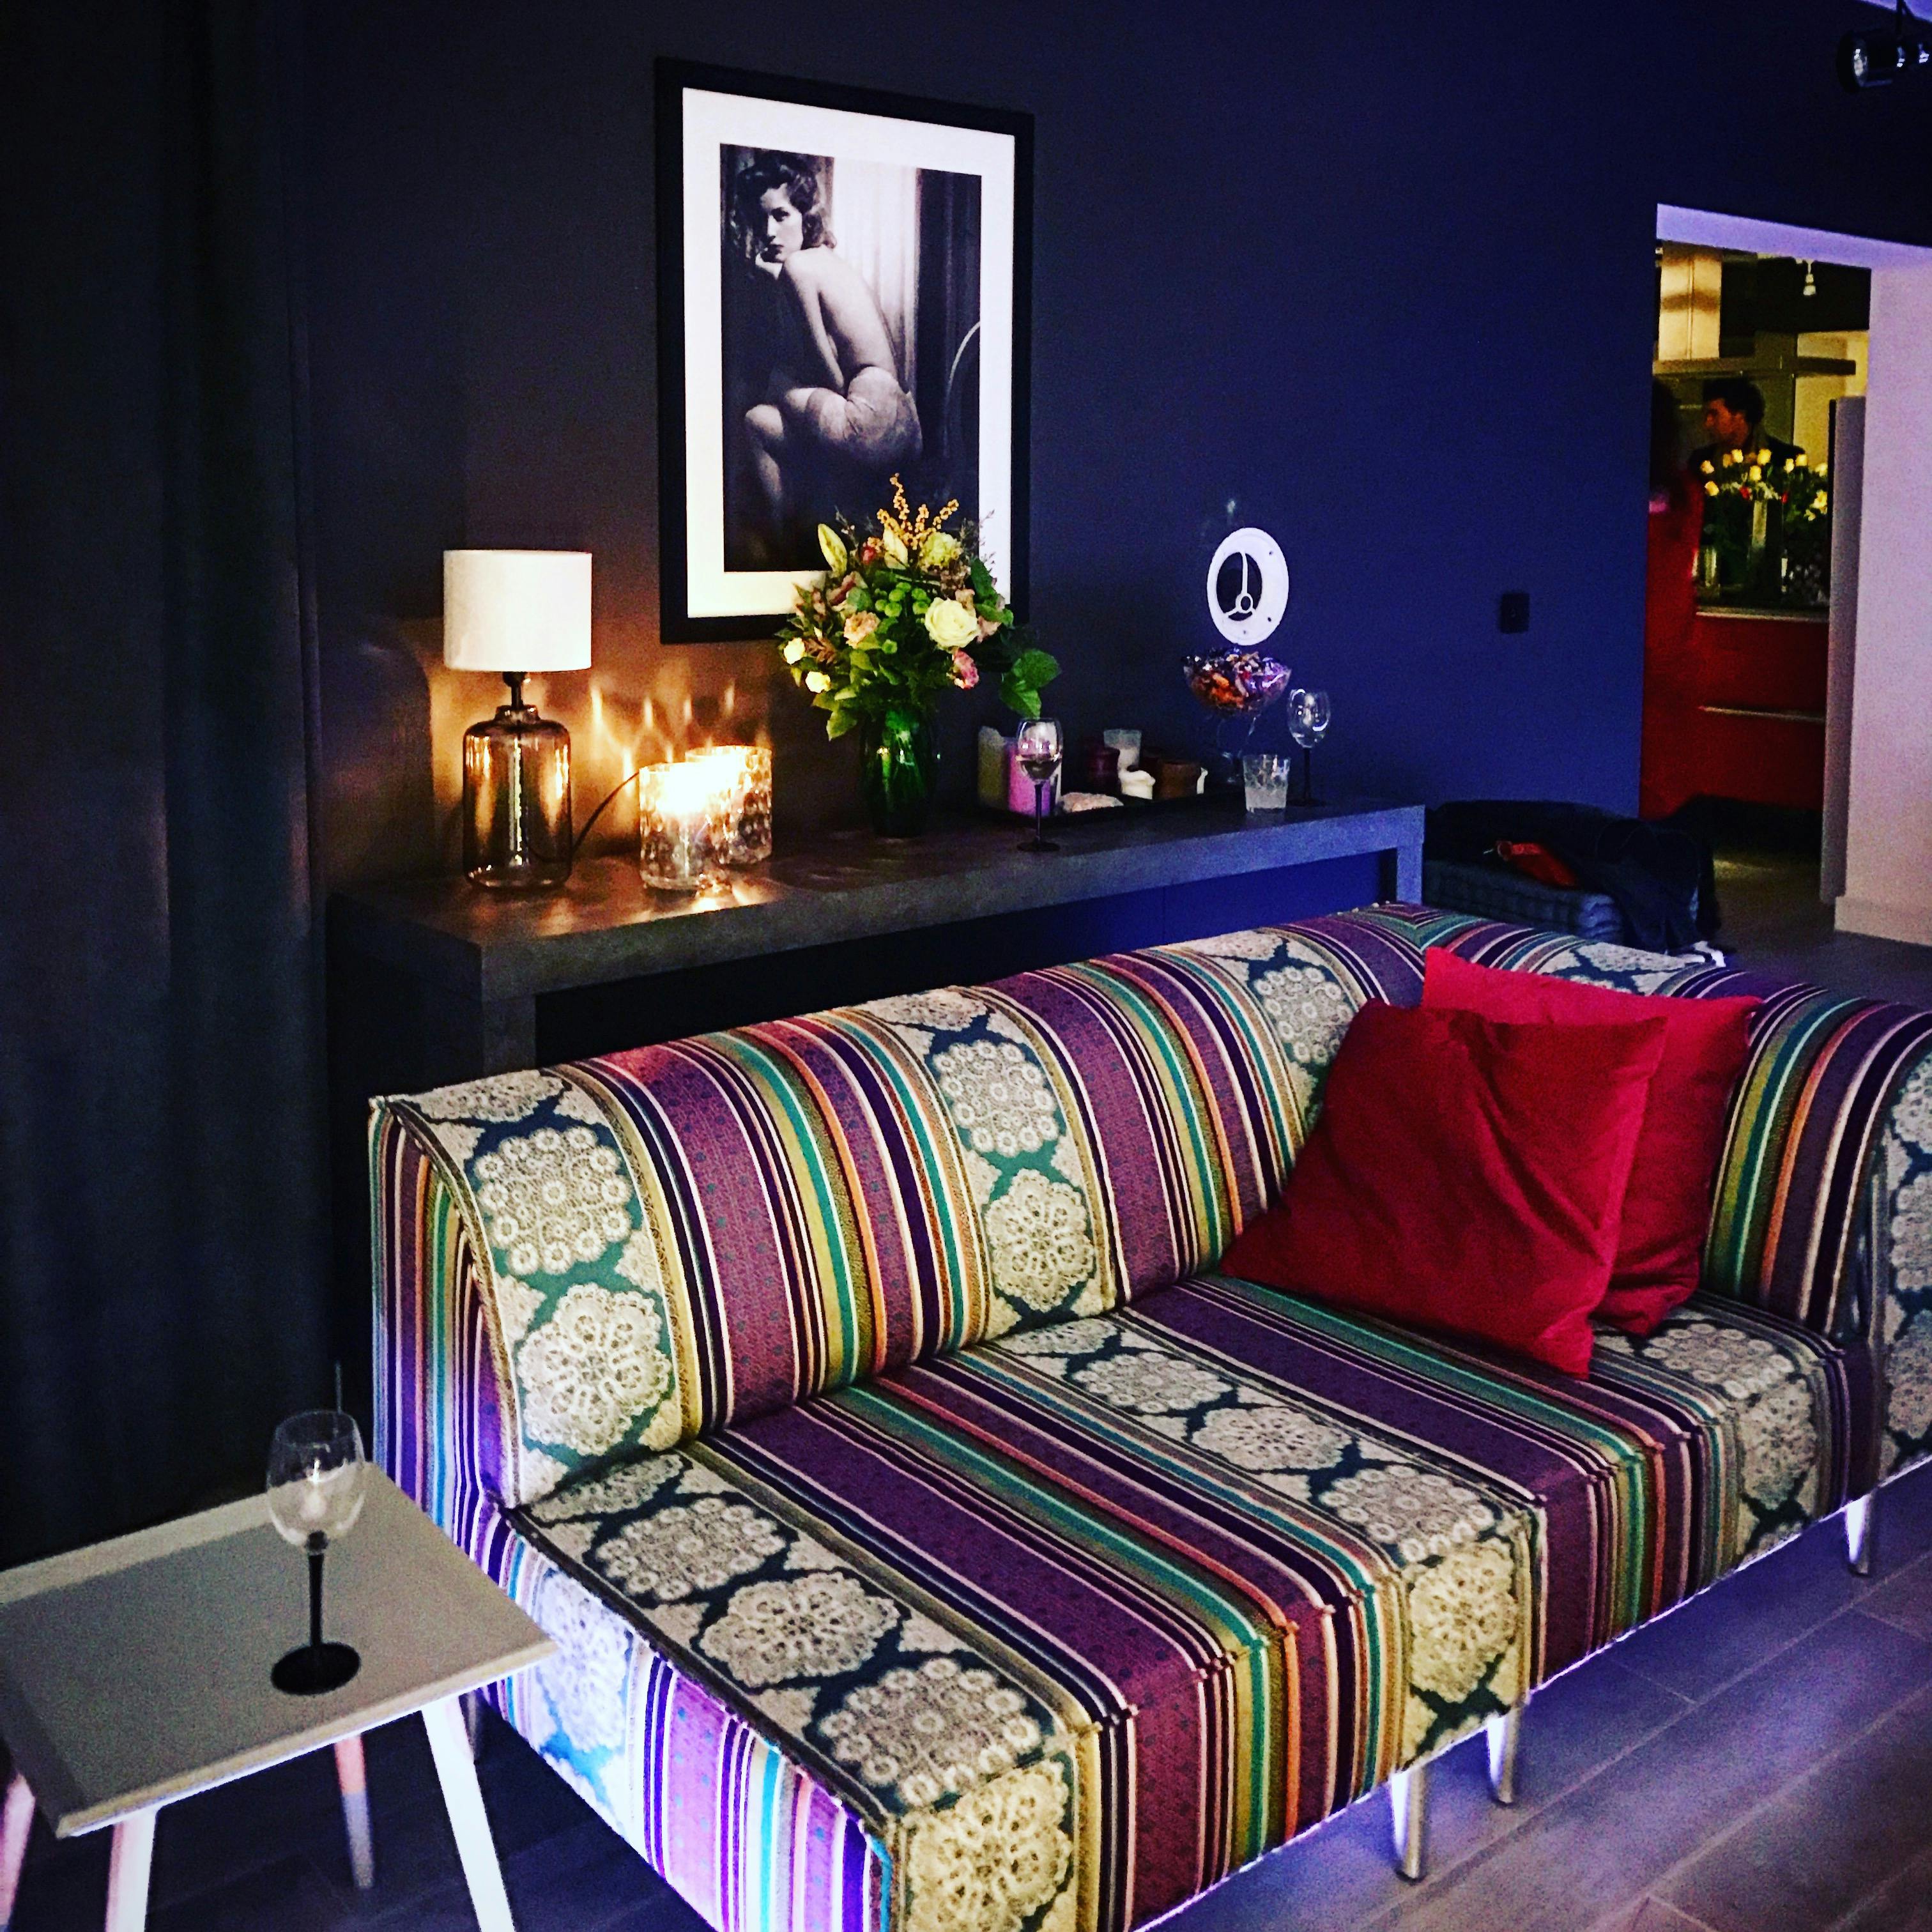 Free stock photo of #home #interior #photo #furniture